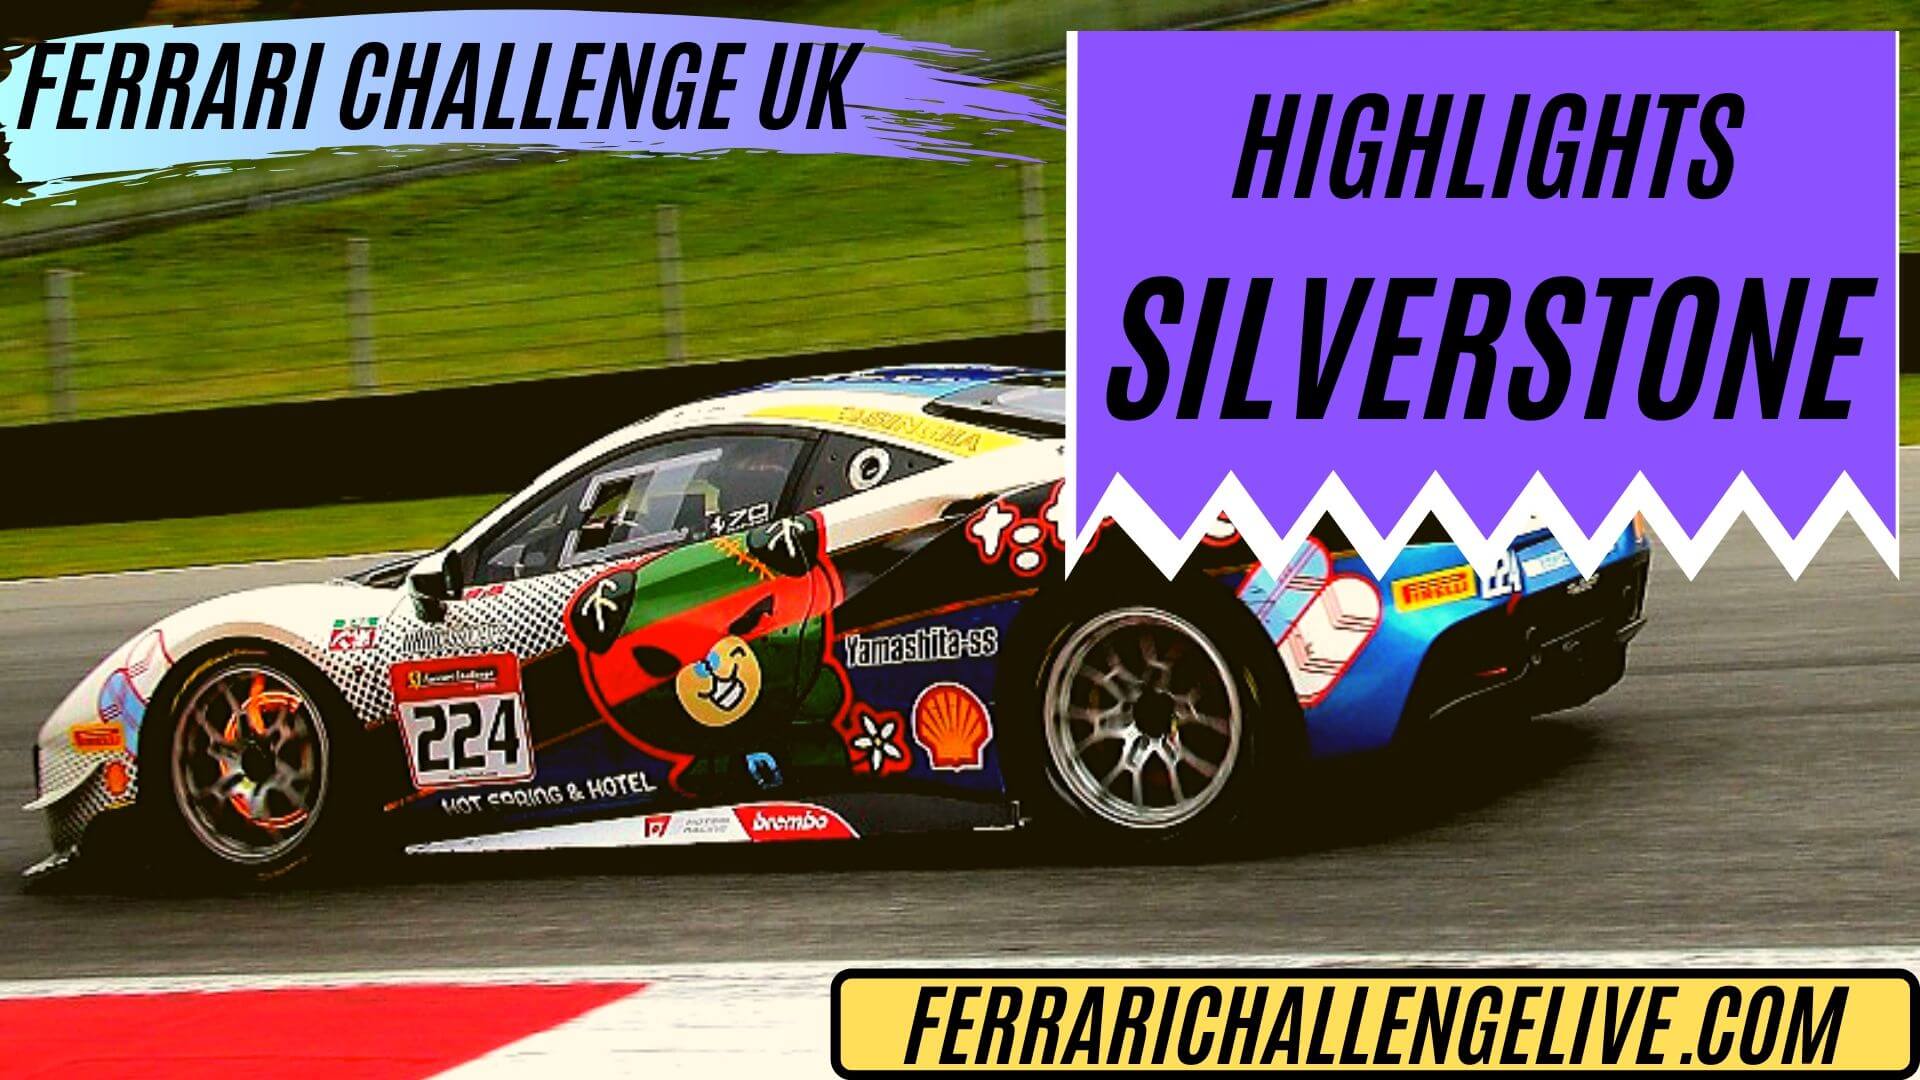 Silverstone Ferrari Challenge UK Highlights 2019